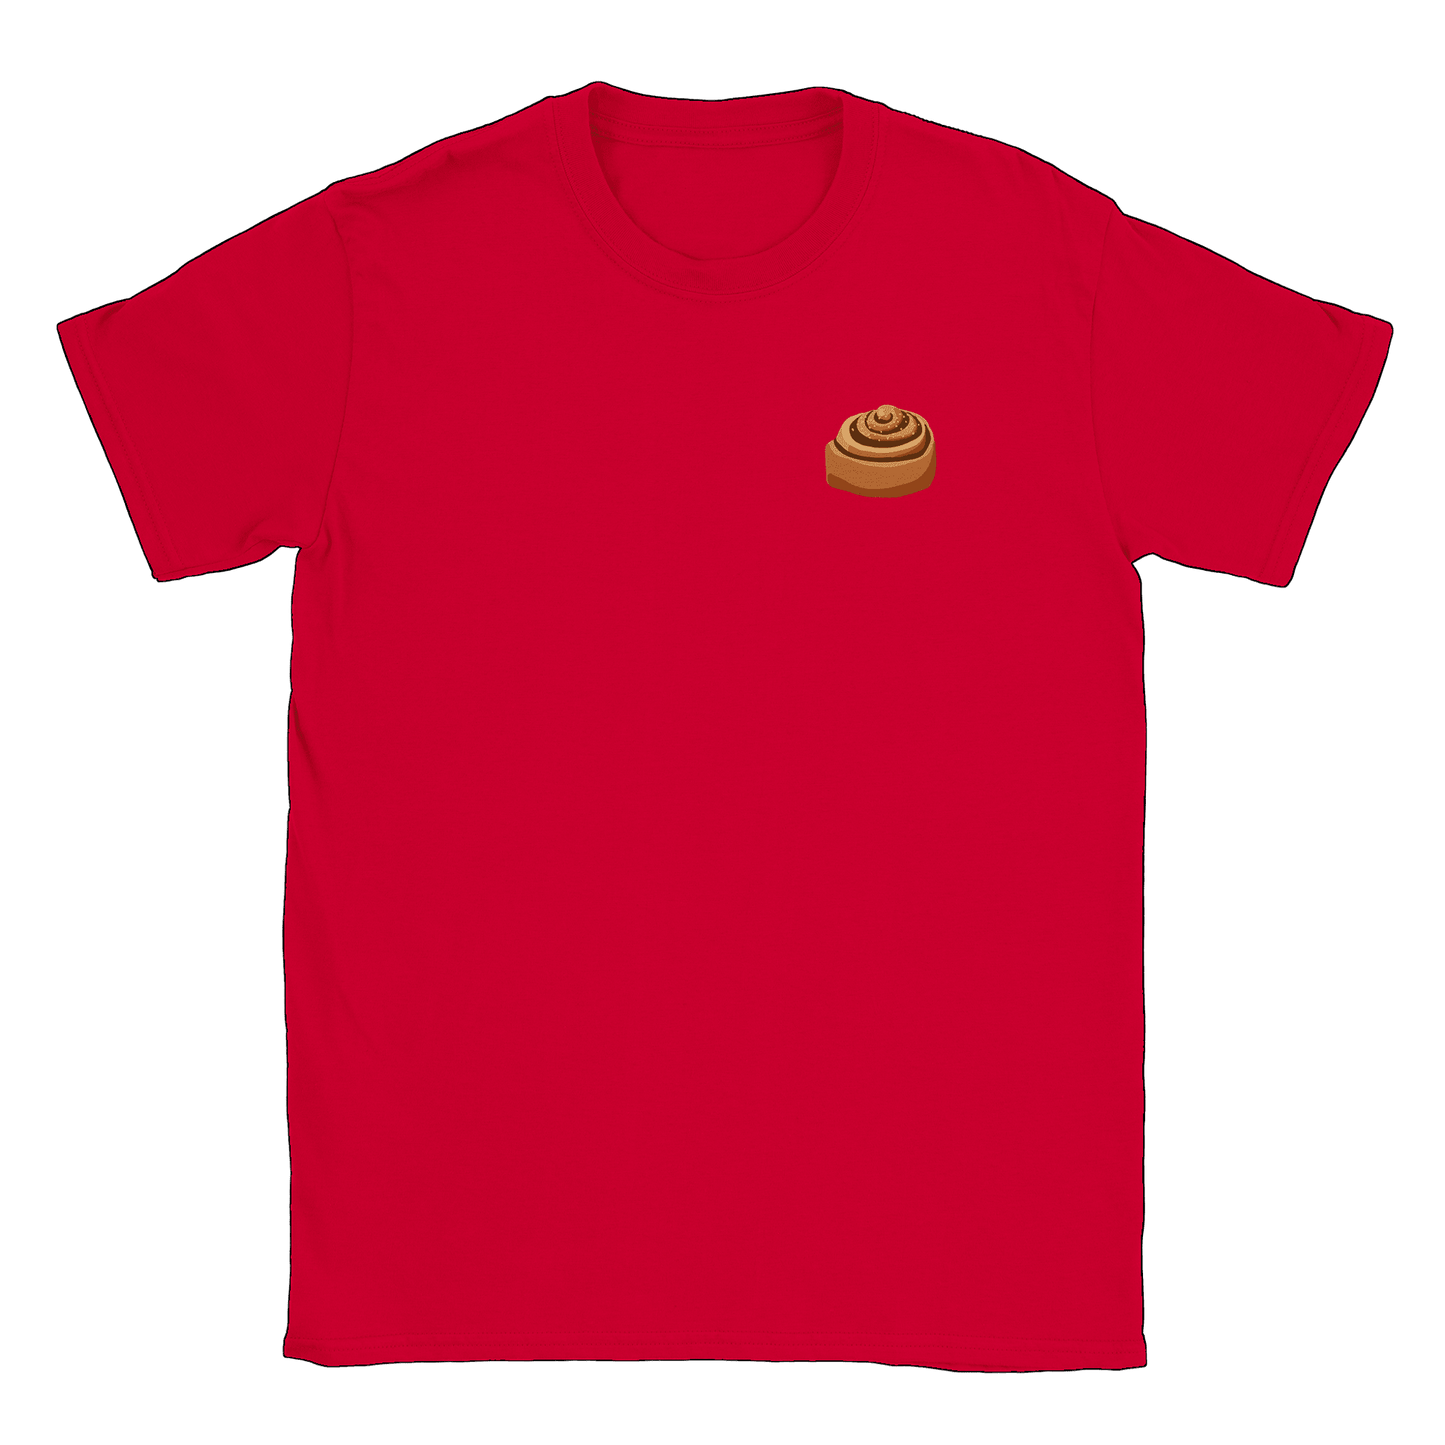 Kanelbulle Liten - T-shirt Röd